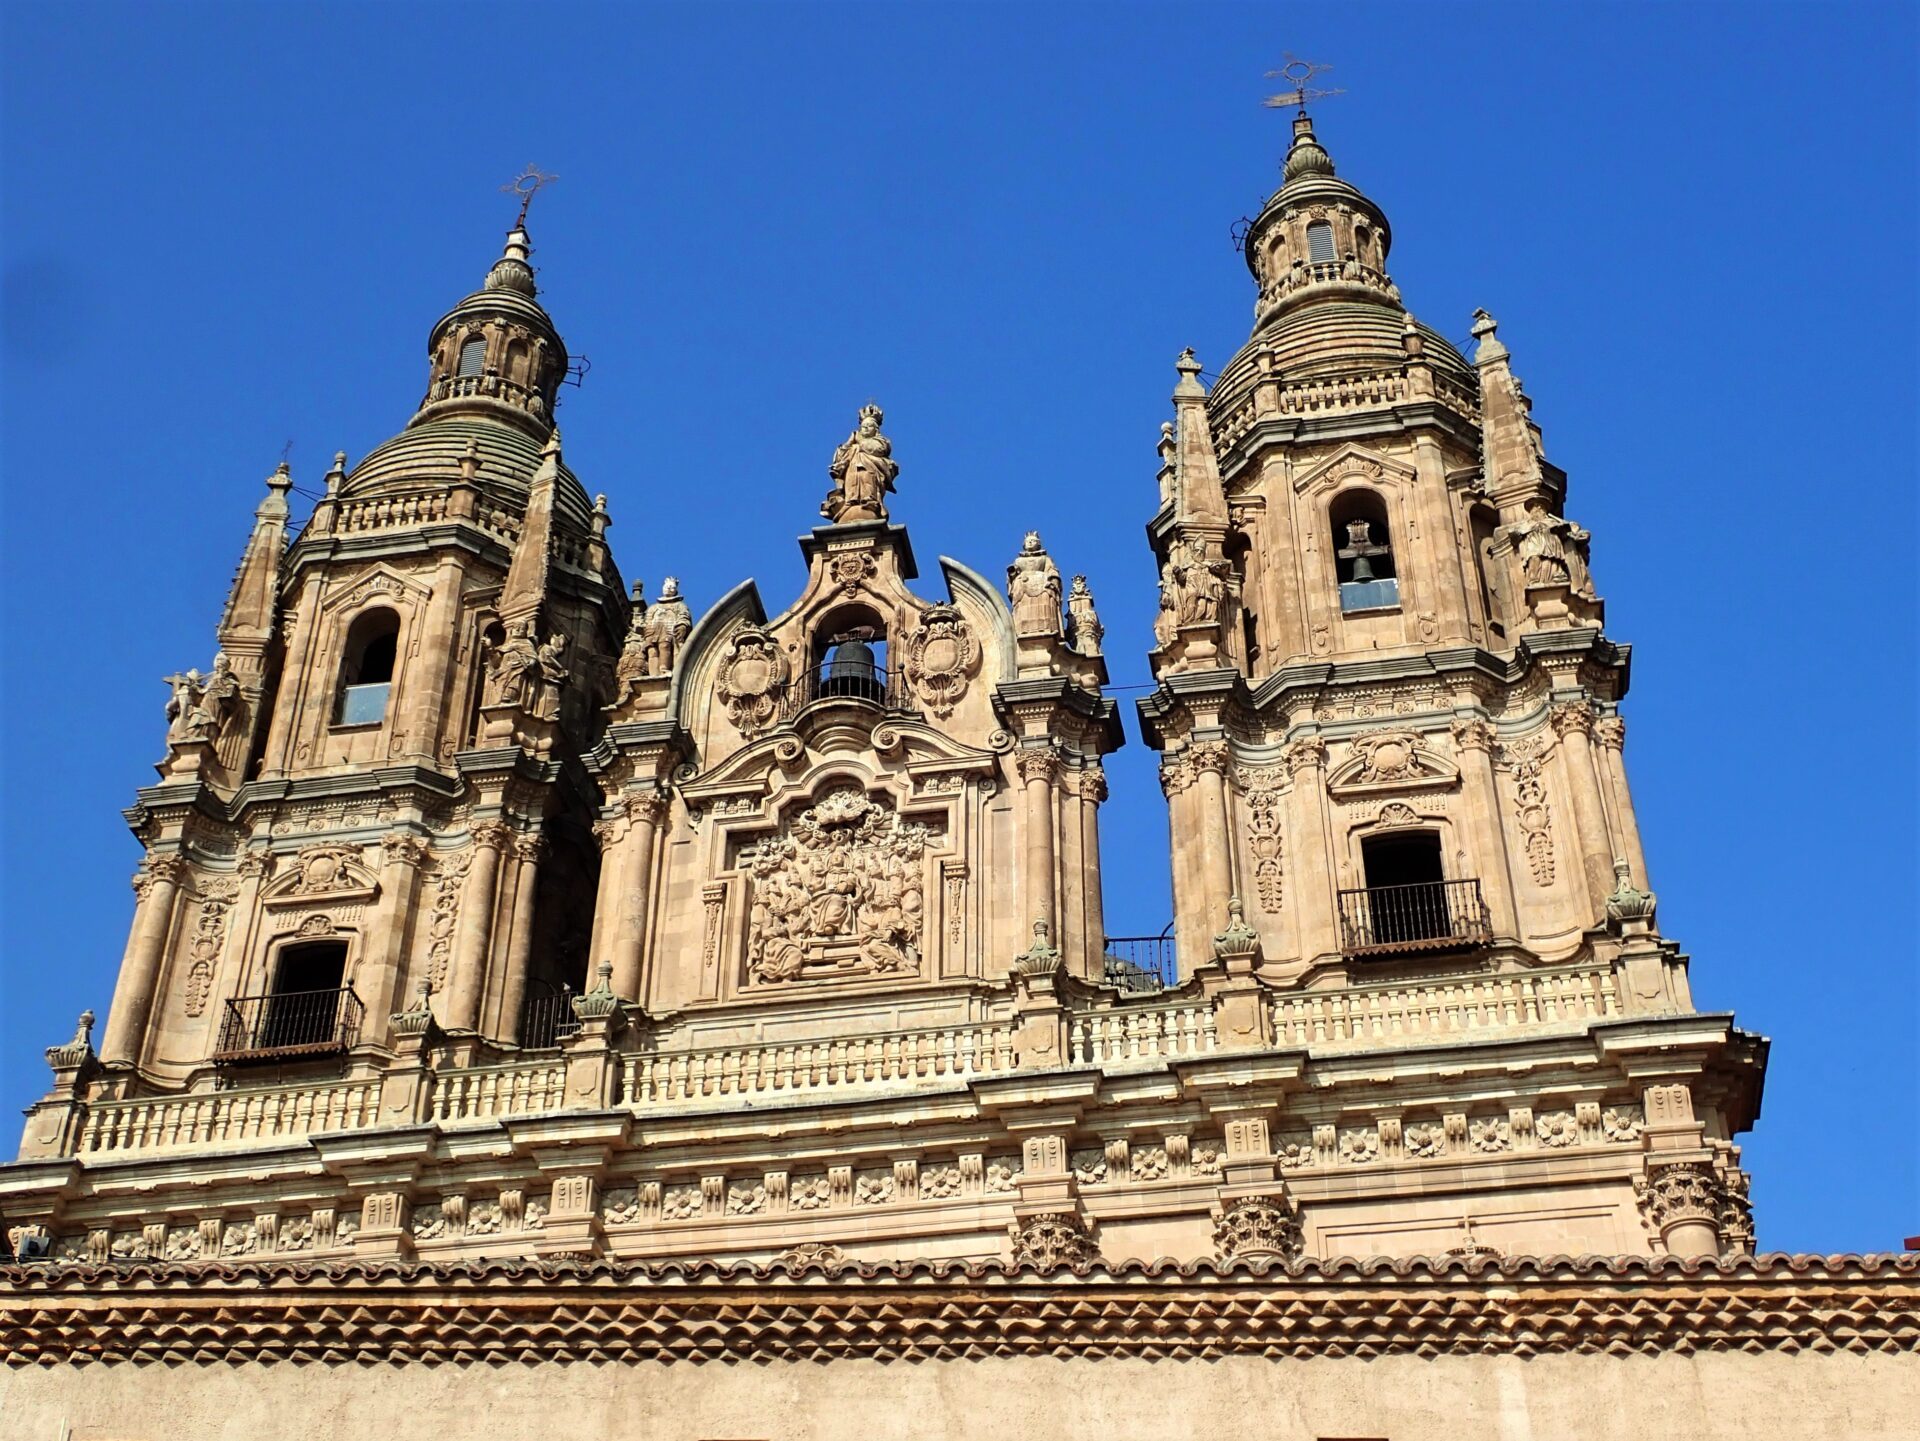 University of Salamanca, Spain